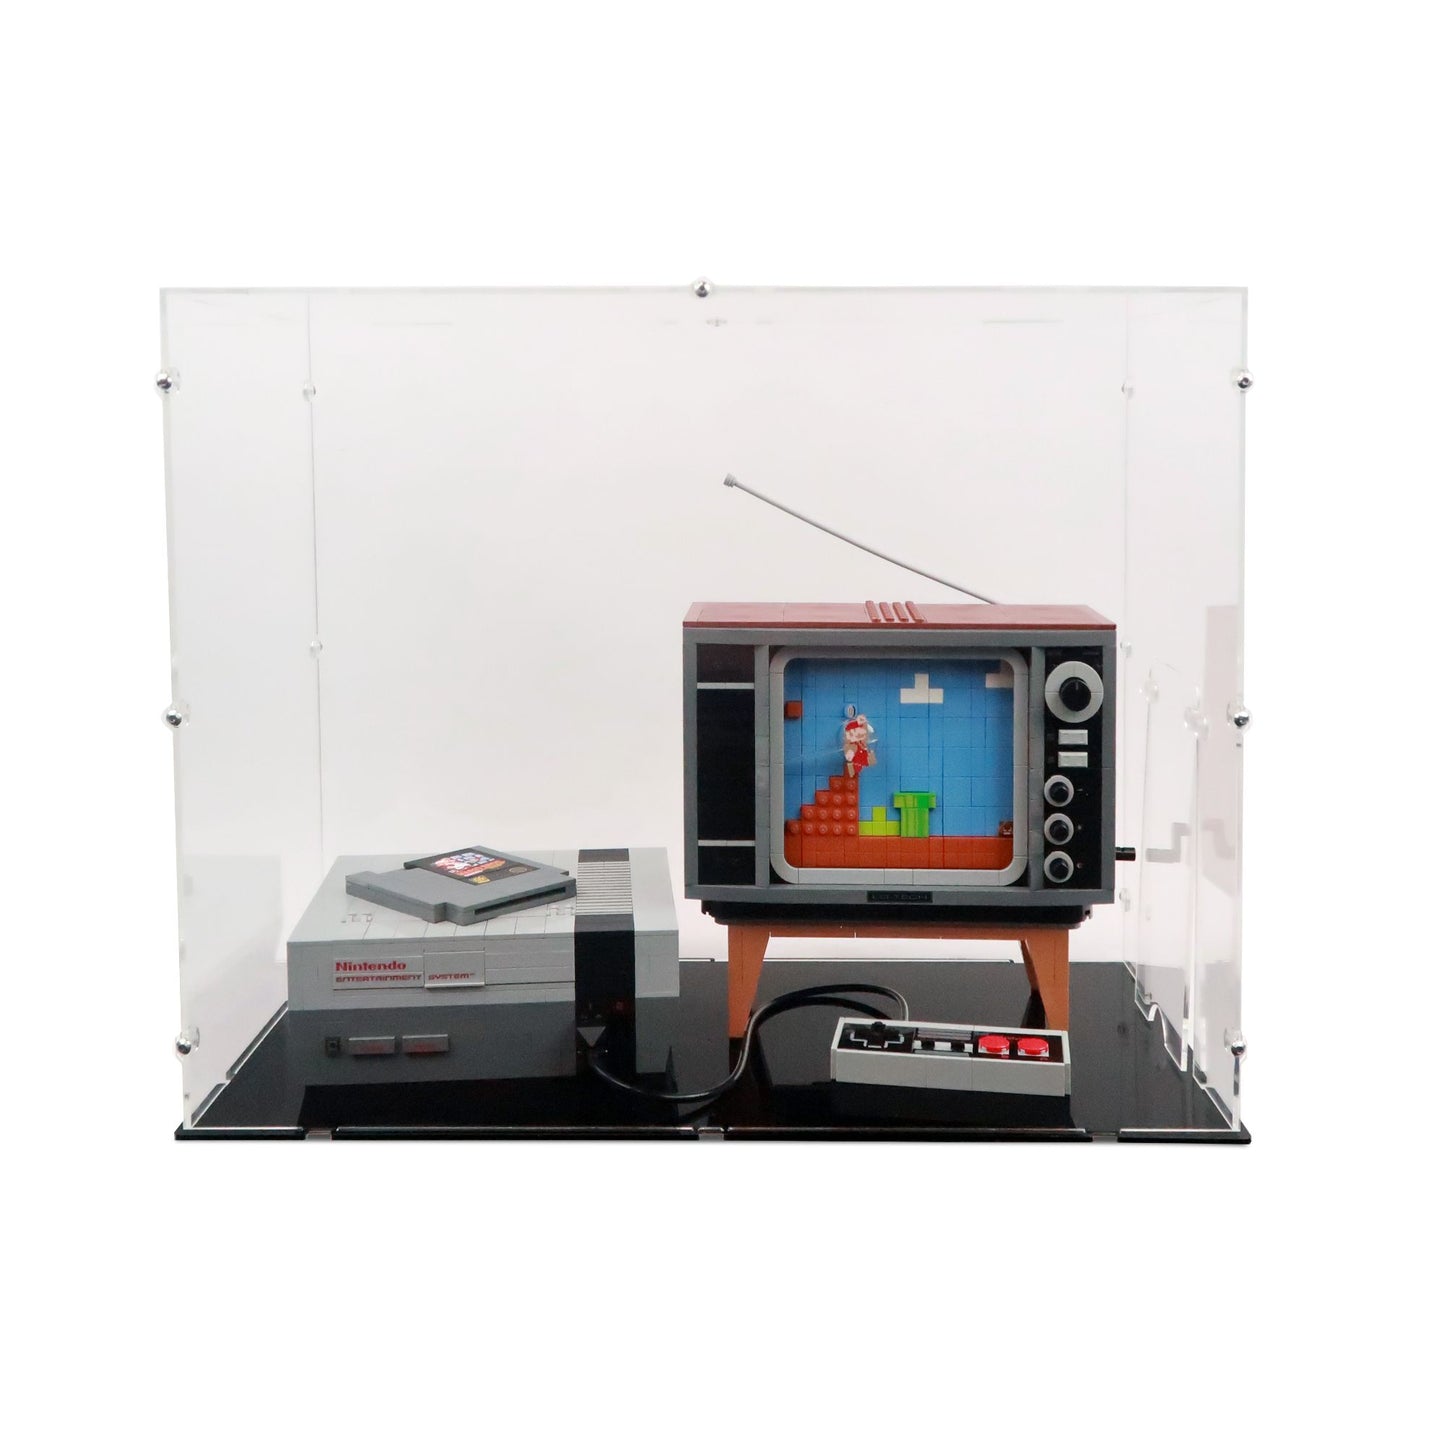 71374 Nintendo Entertainment System Display Case